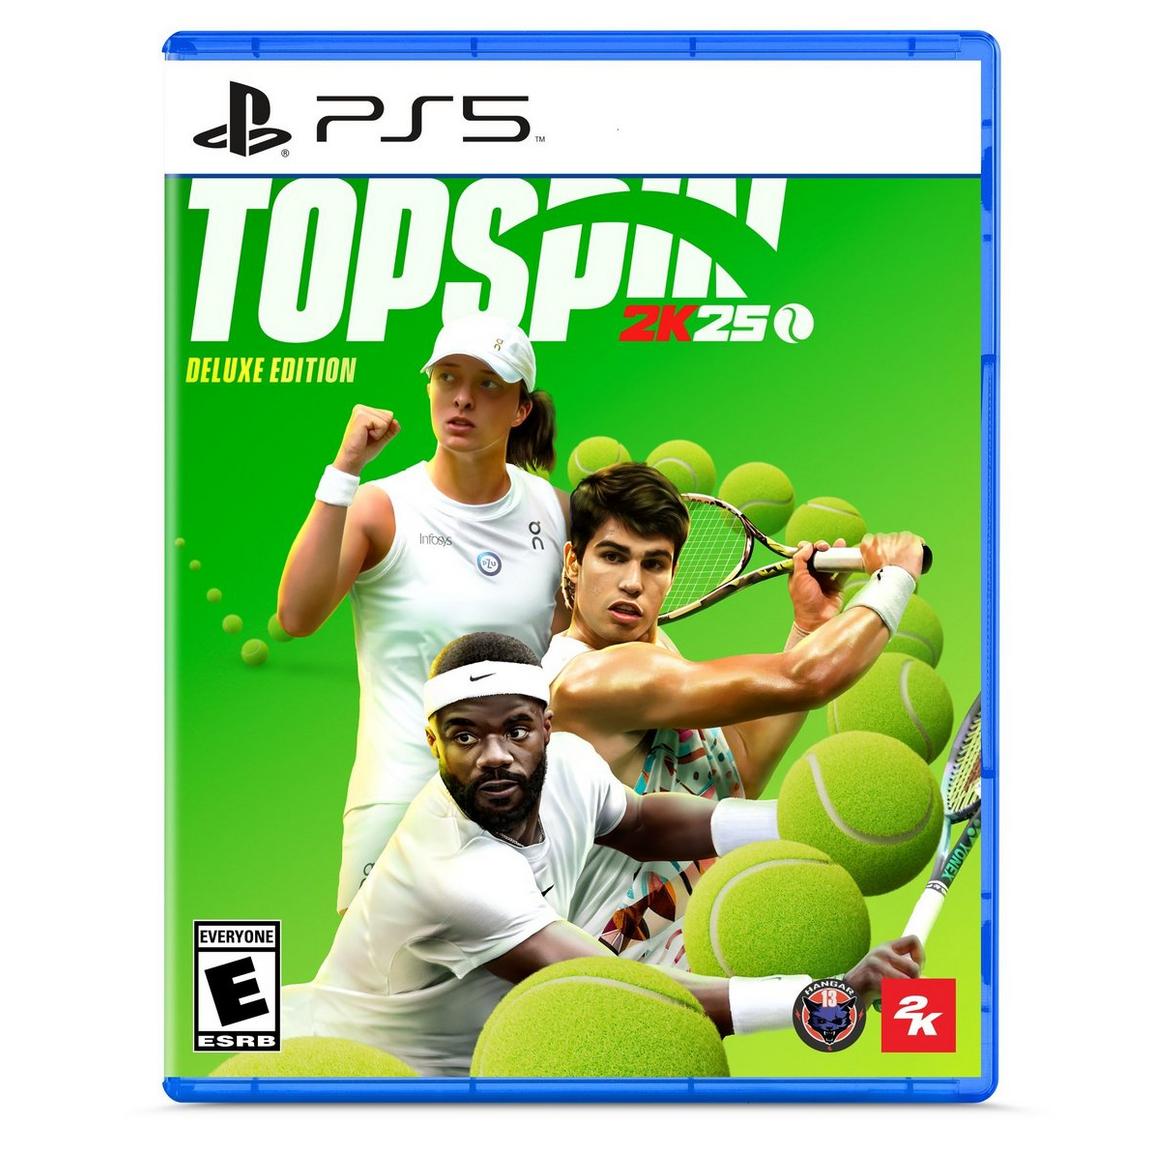 Видеоигра TopSpin 2K25 Deluxe Edition - PlayStation 5 штауффер рене роджер федерер биография